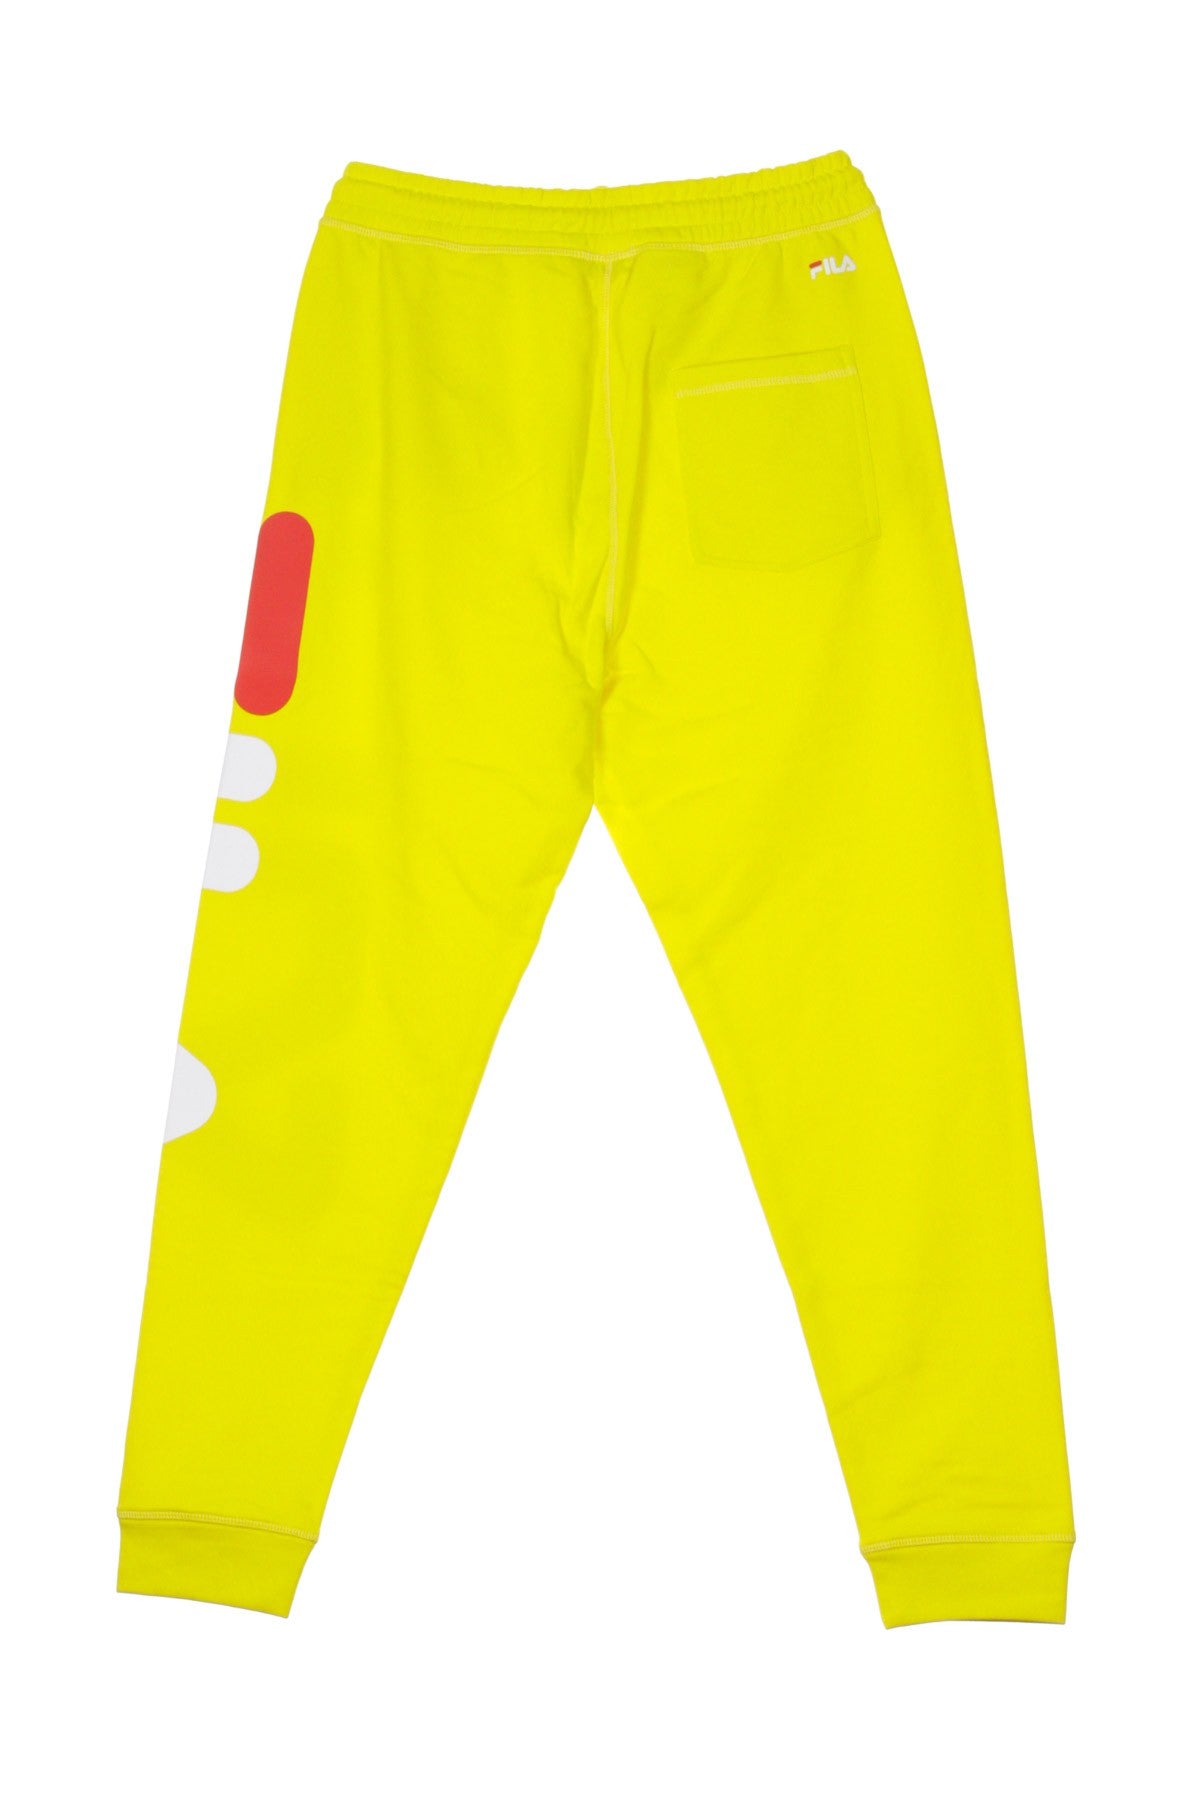 Pantalone Tuta Felpato Uomo Classic Pure Pants Empire Yellow